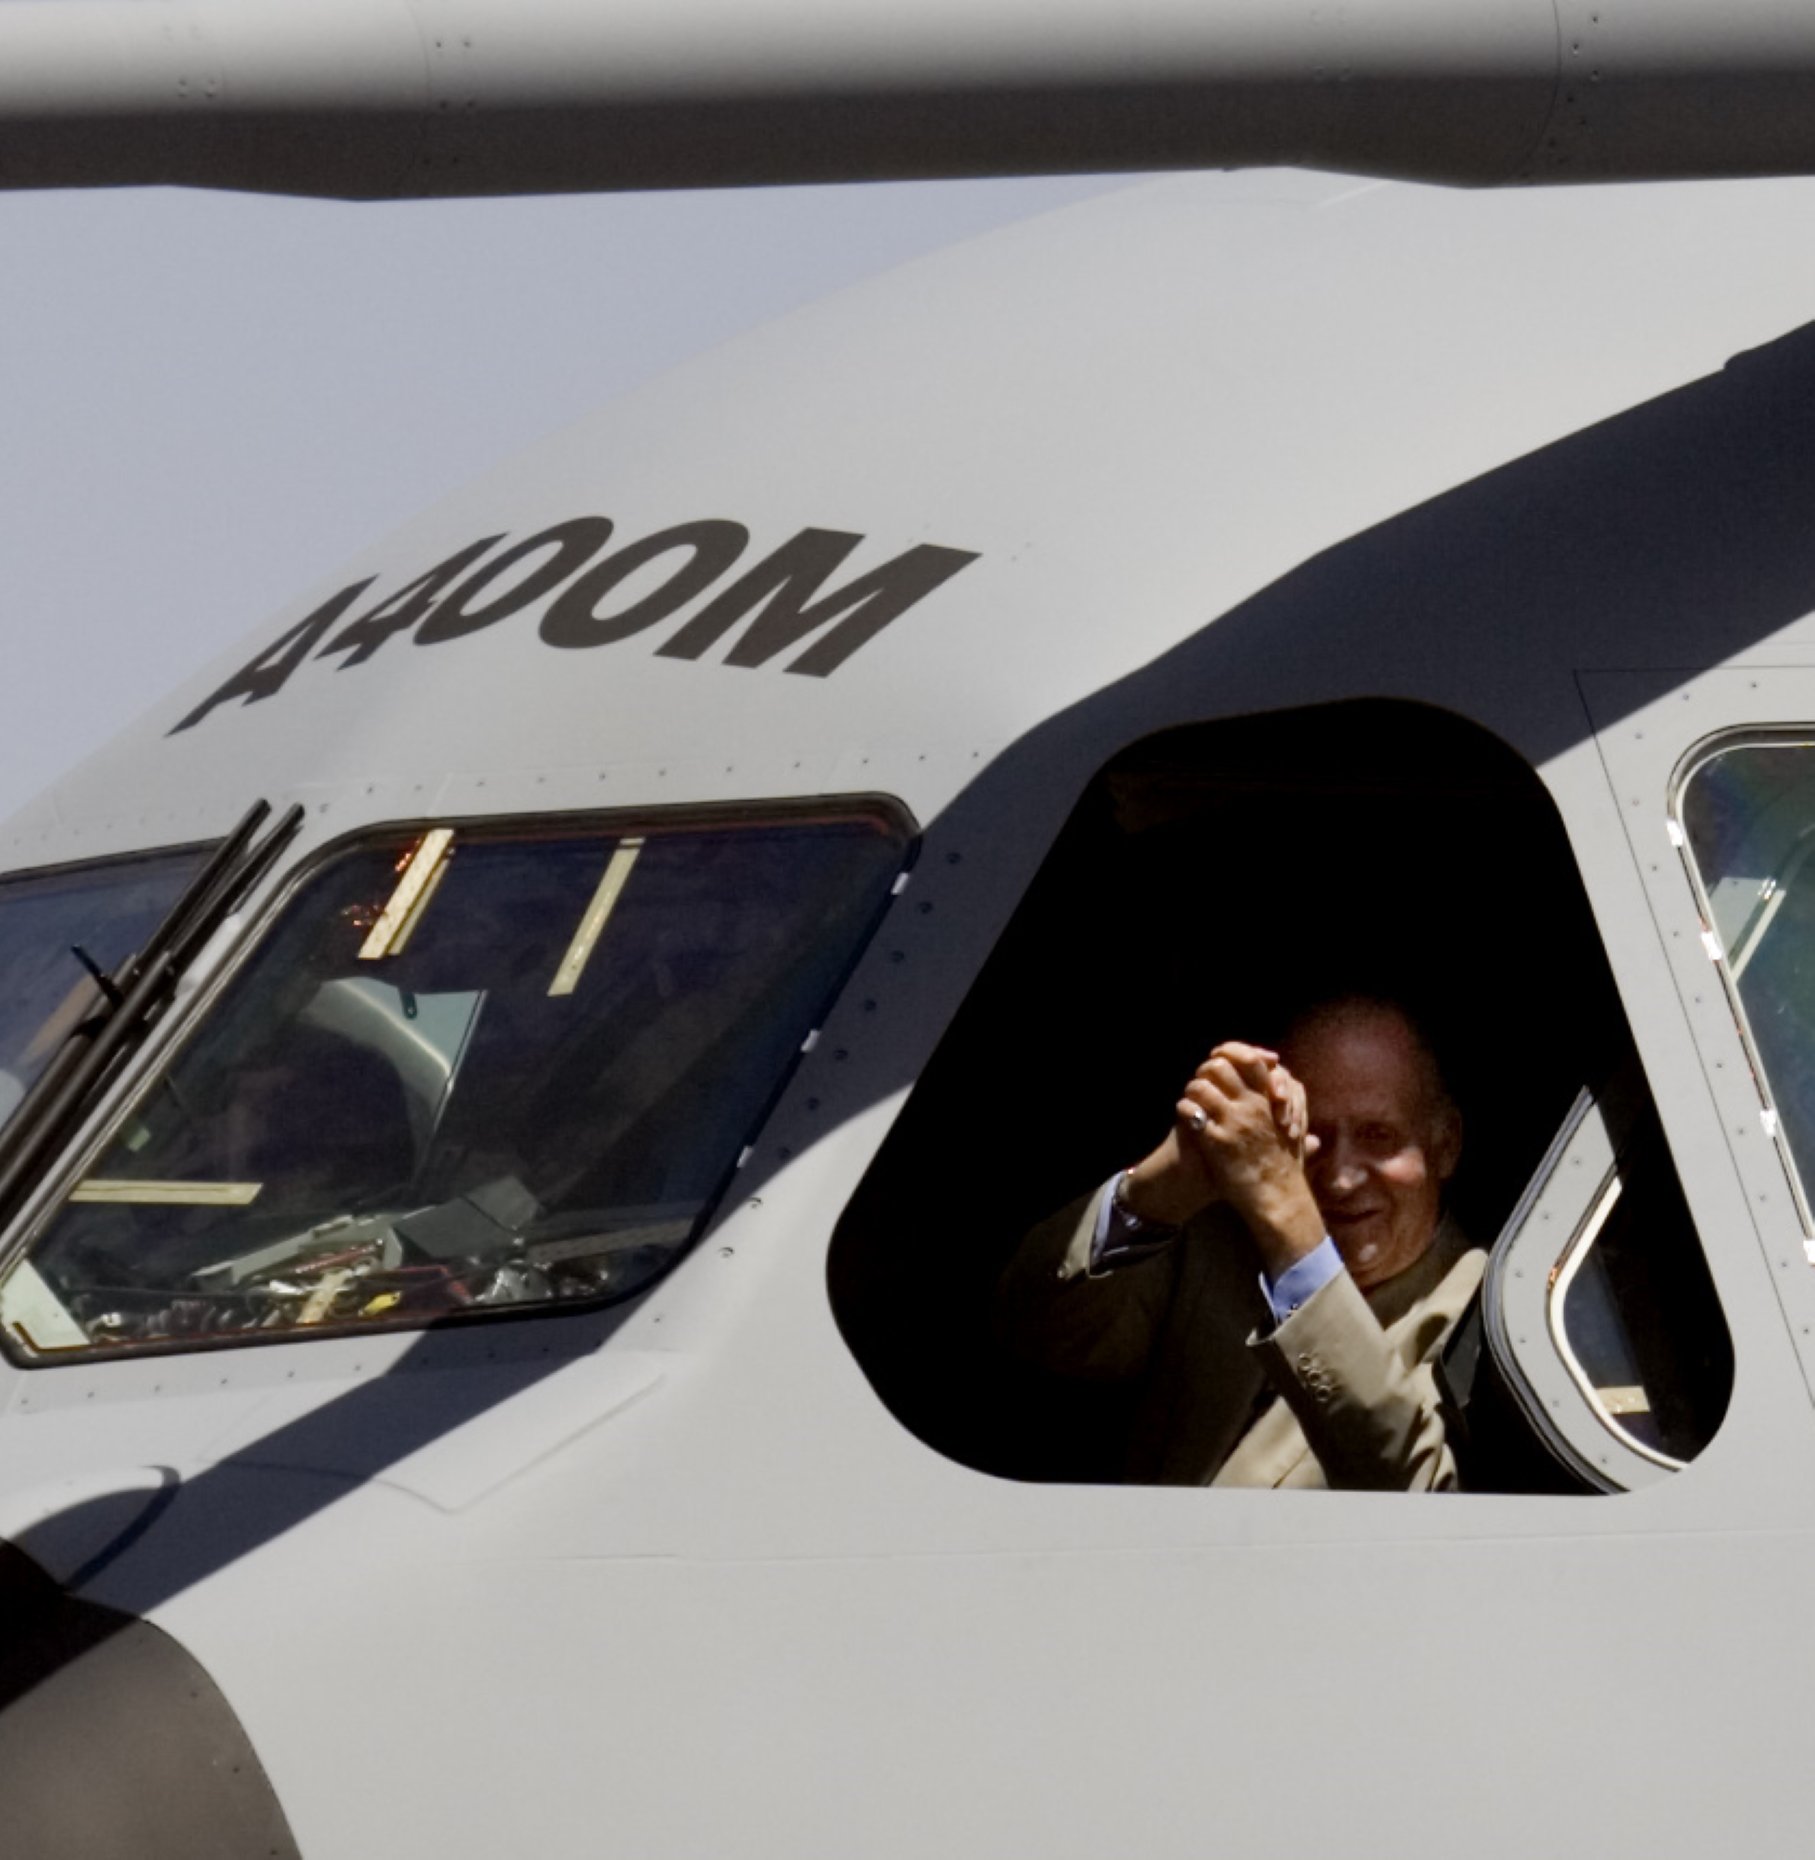 Temeritat de Joan Carles I en un avió ple de combustible: "Con dos cojones"